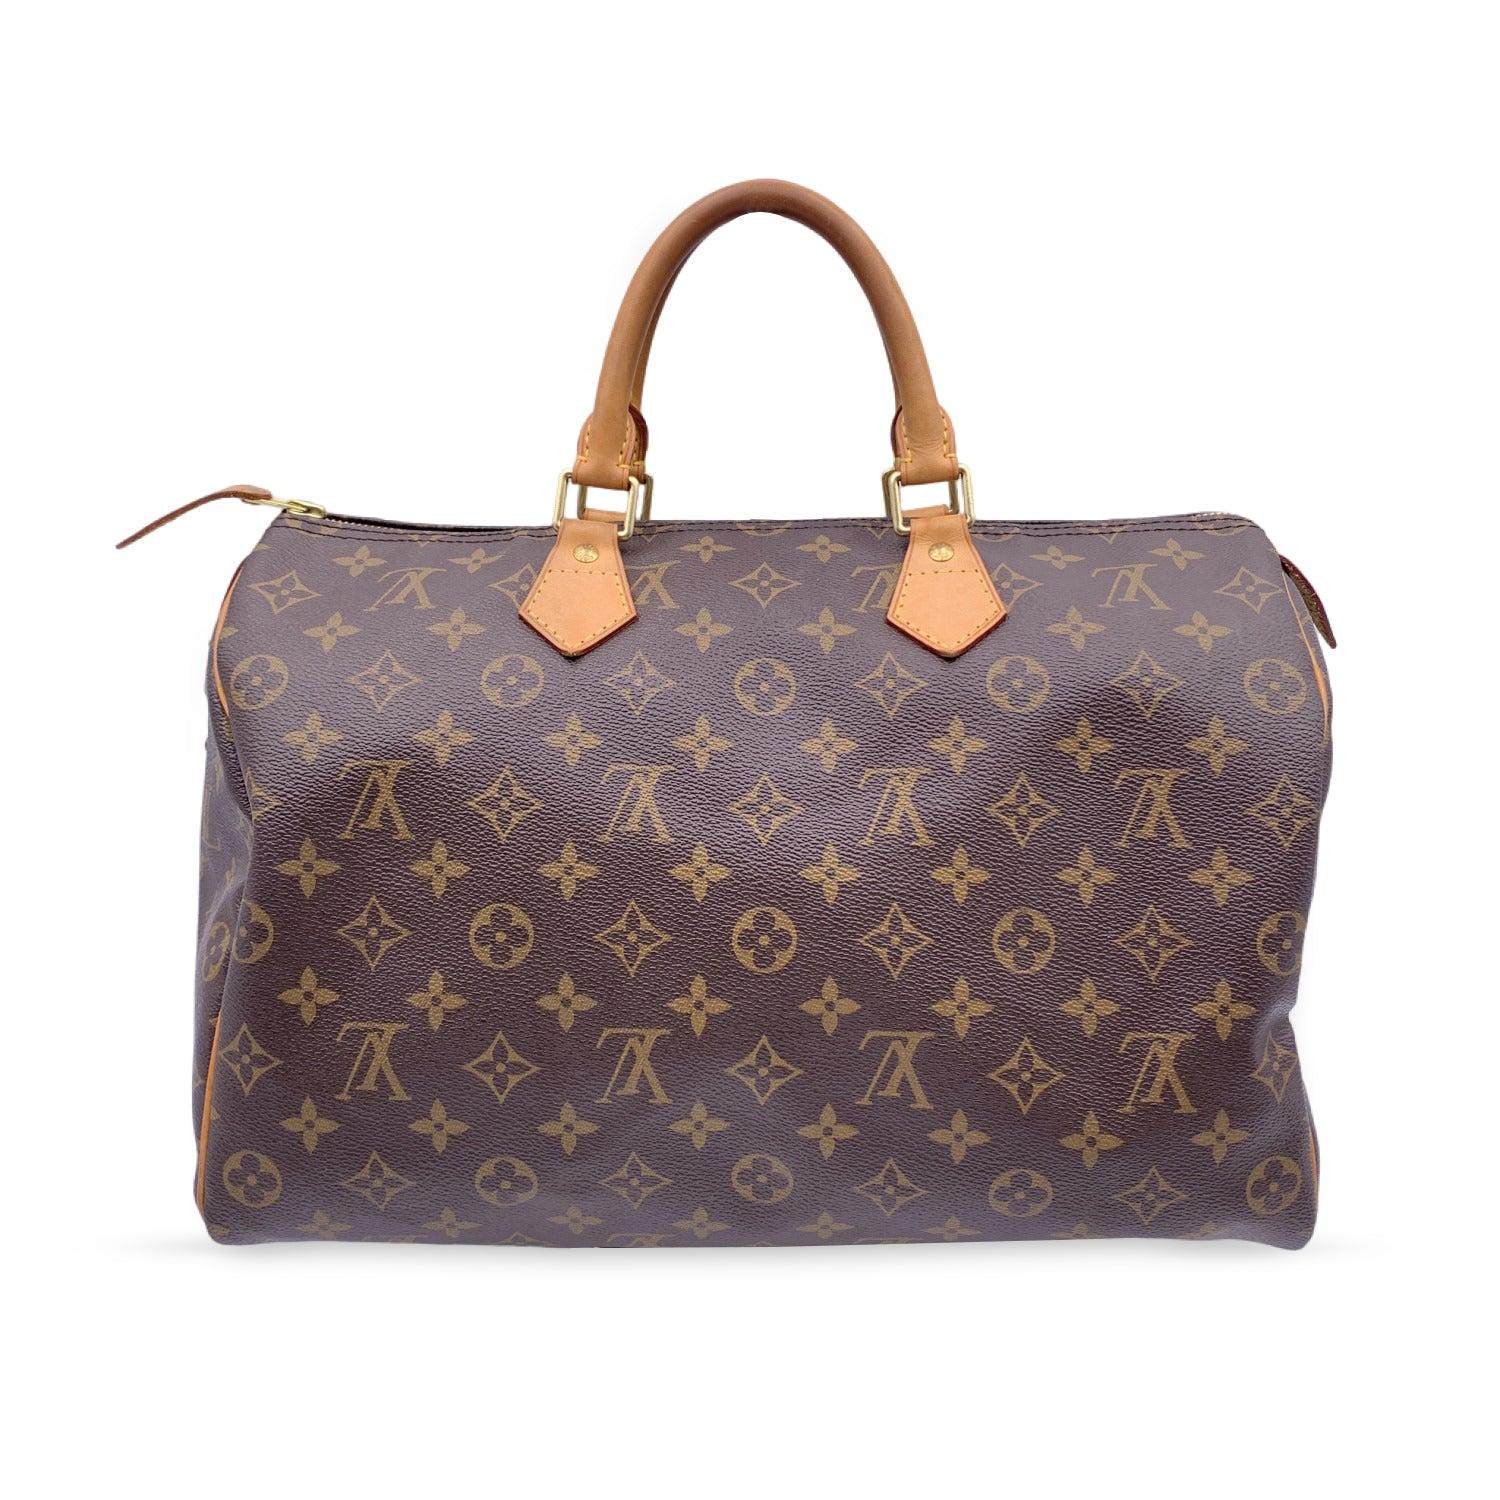 Louis Vuitton Monogram Canvas Speedy 35 Top Handle Bag M41524